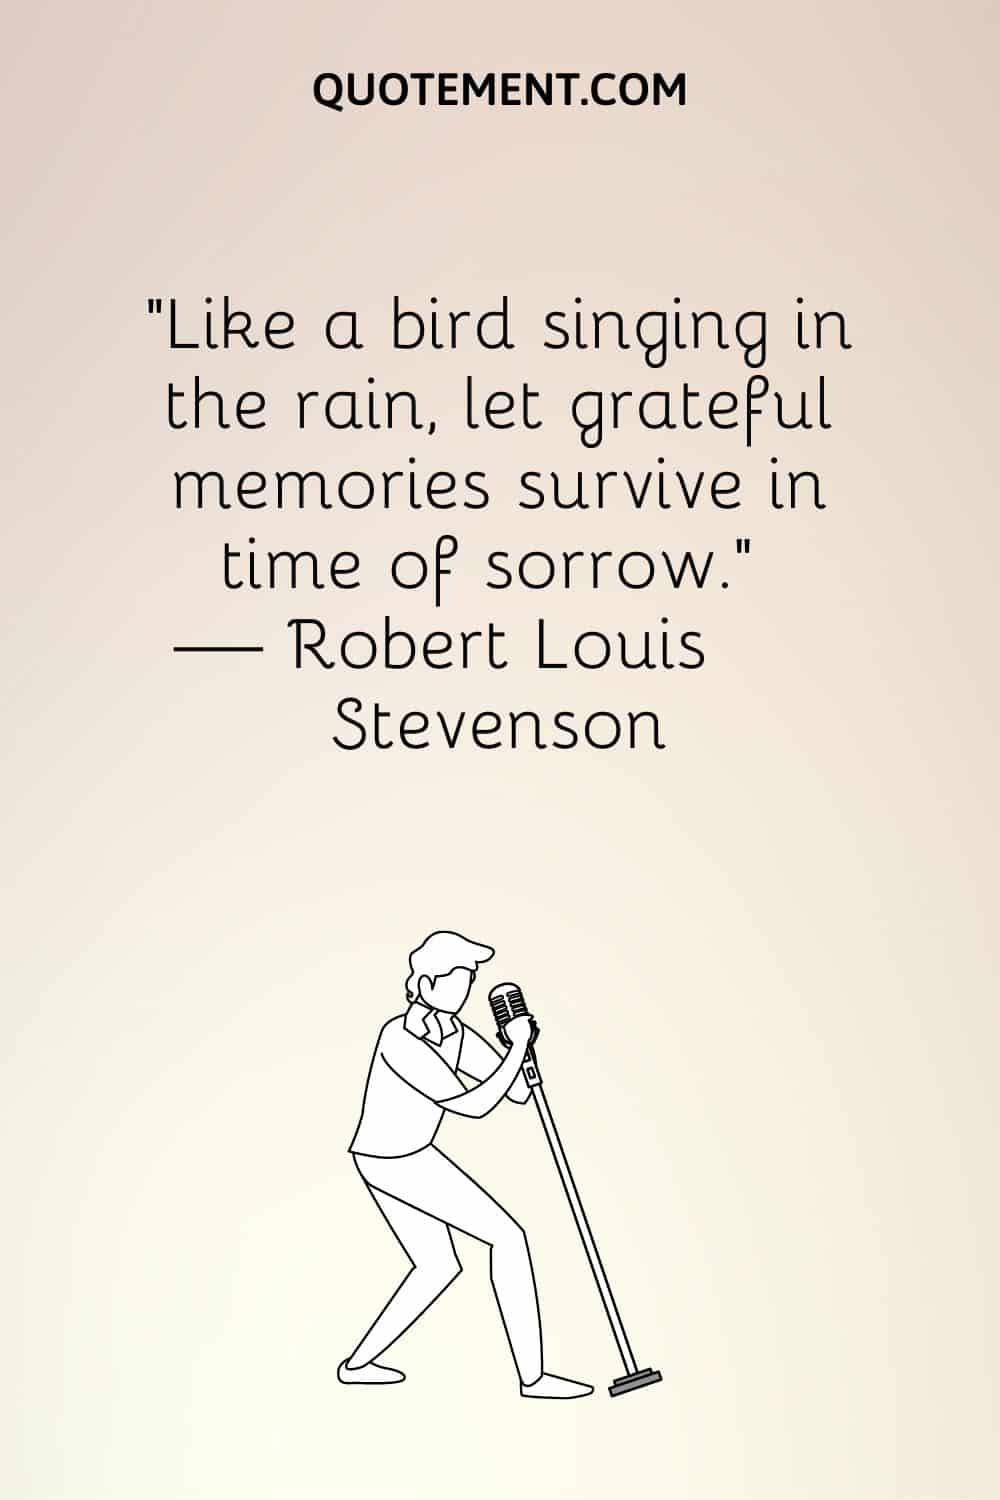 “Like a bird singing in the rain, let grateful memories survive in time of sorrow.” — Robert Louis Stevenson